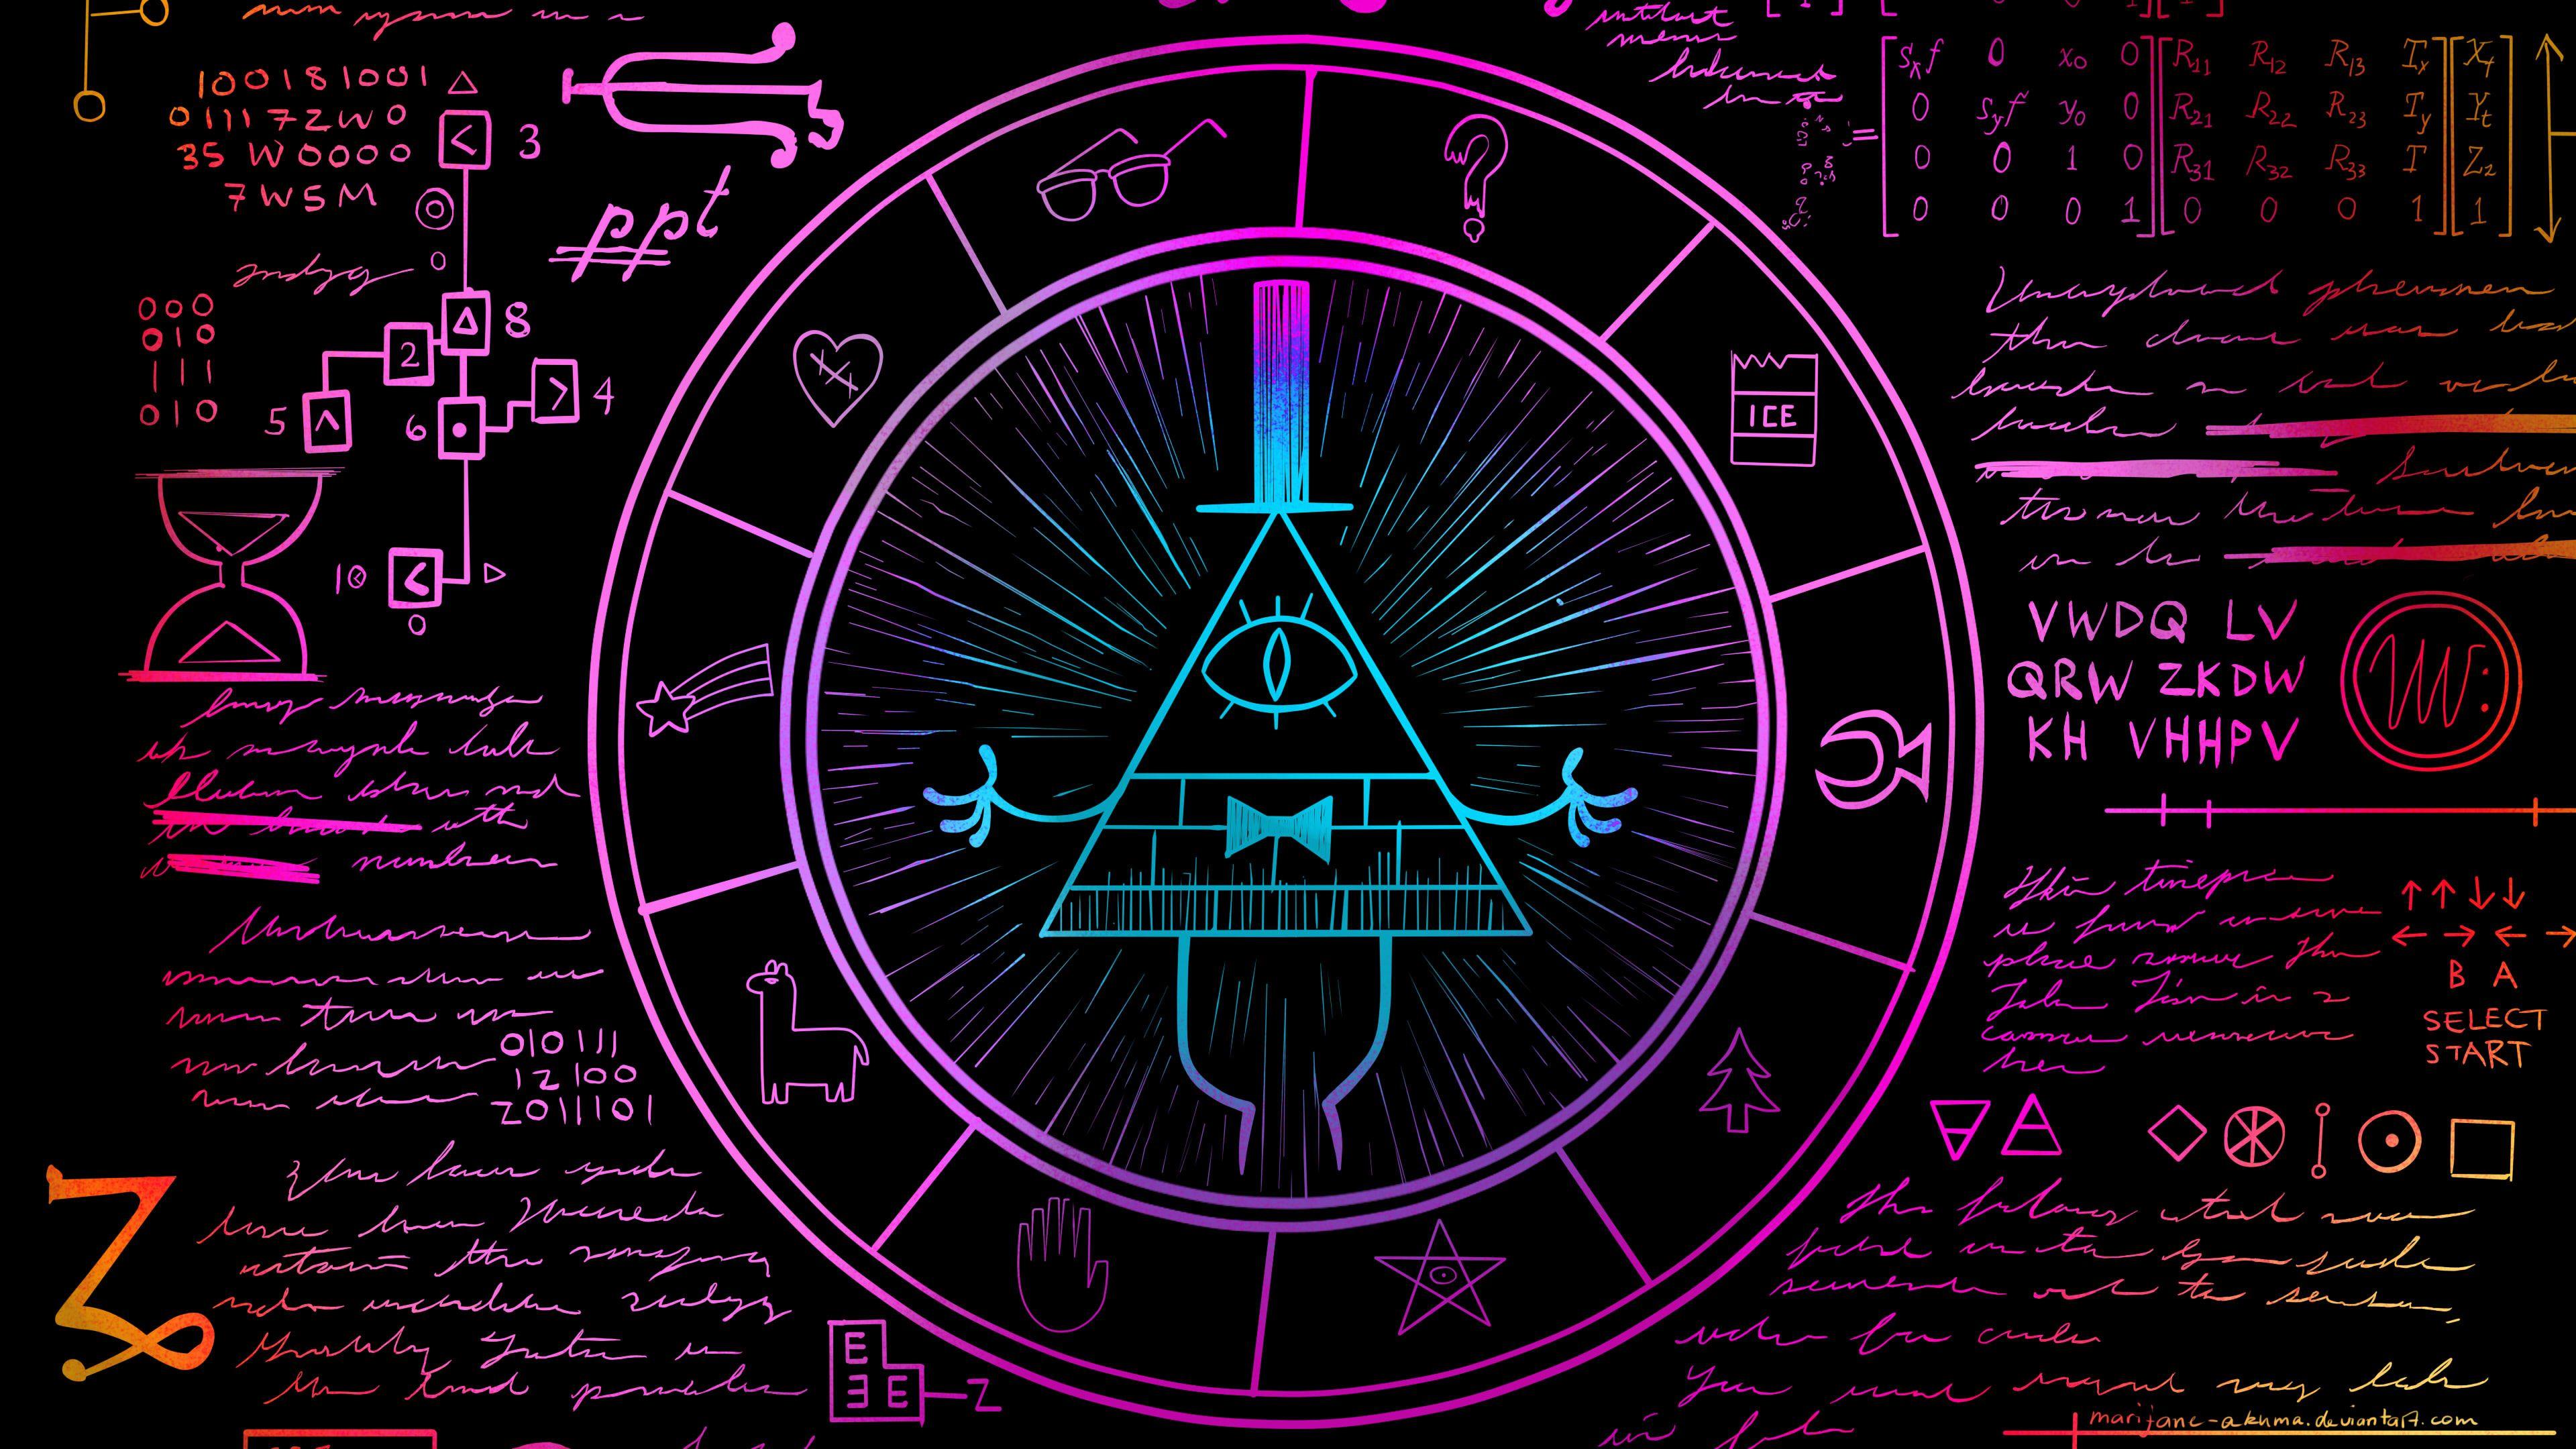 General 3840x2160 dark neon circle colorful artwork symbolism Gravity Falls Bill Cipher  occult diagrams formula symbols notes ancient